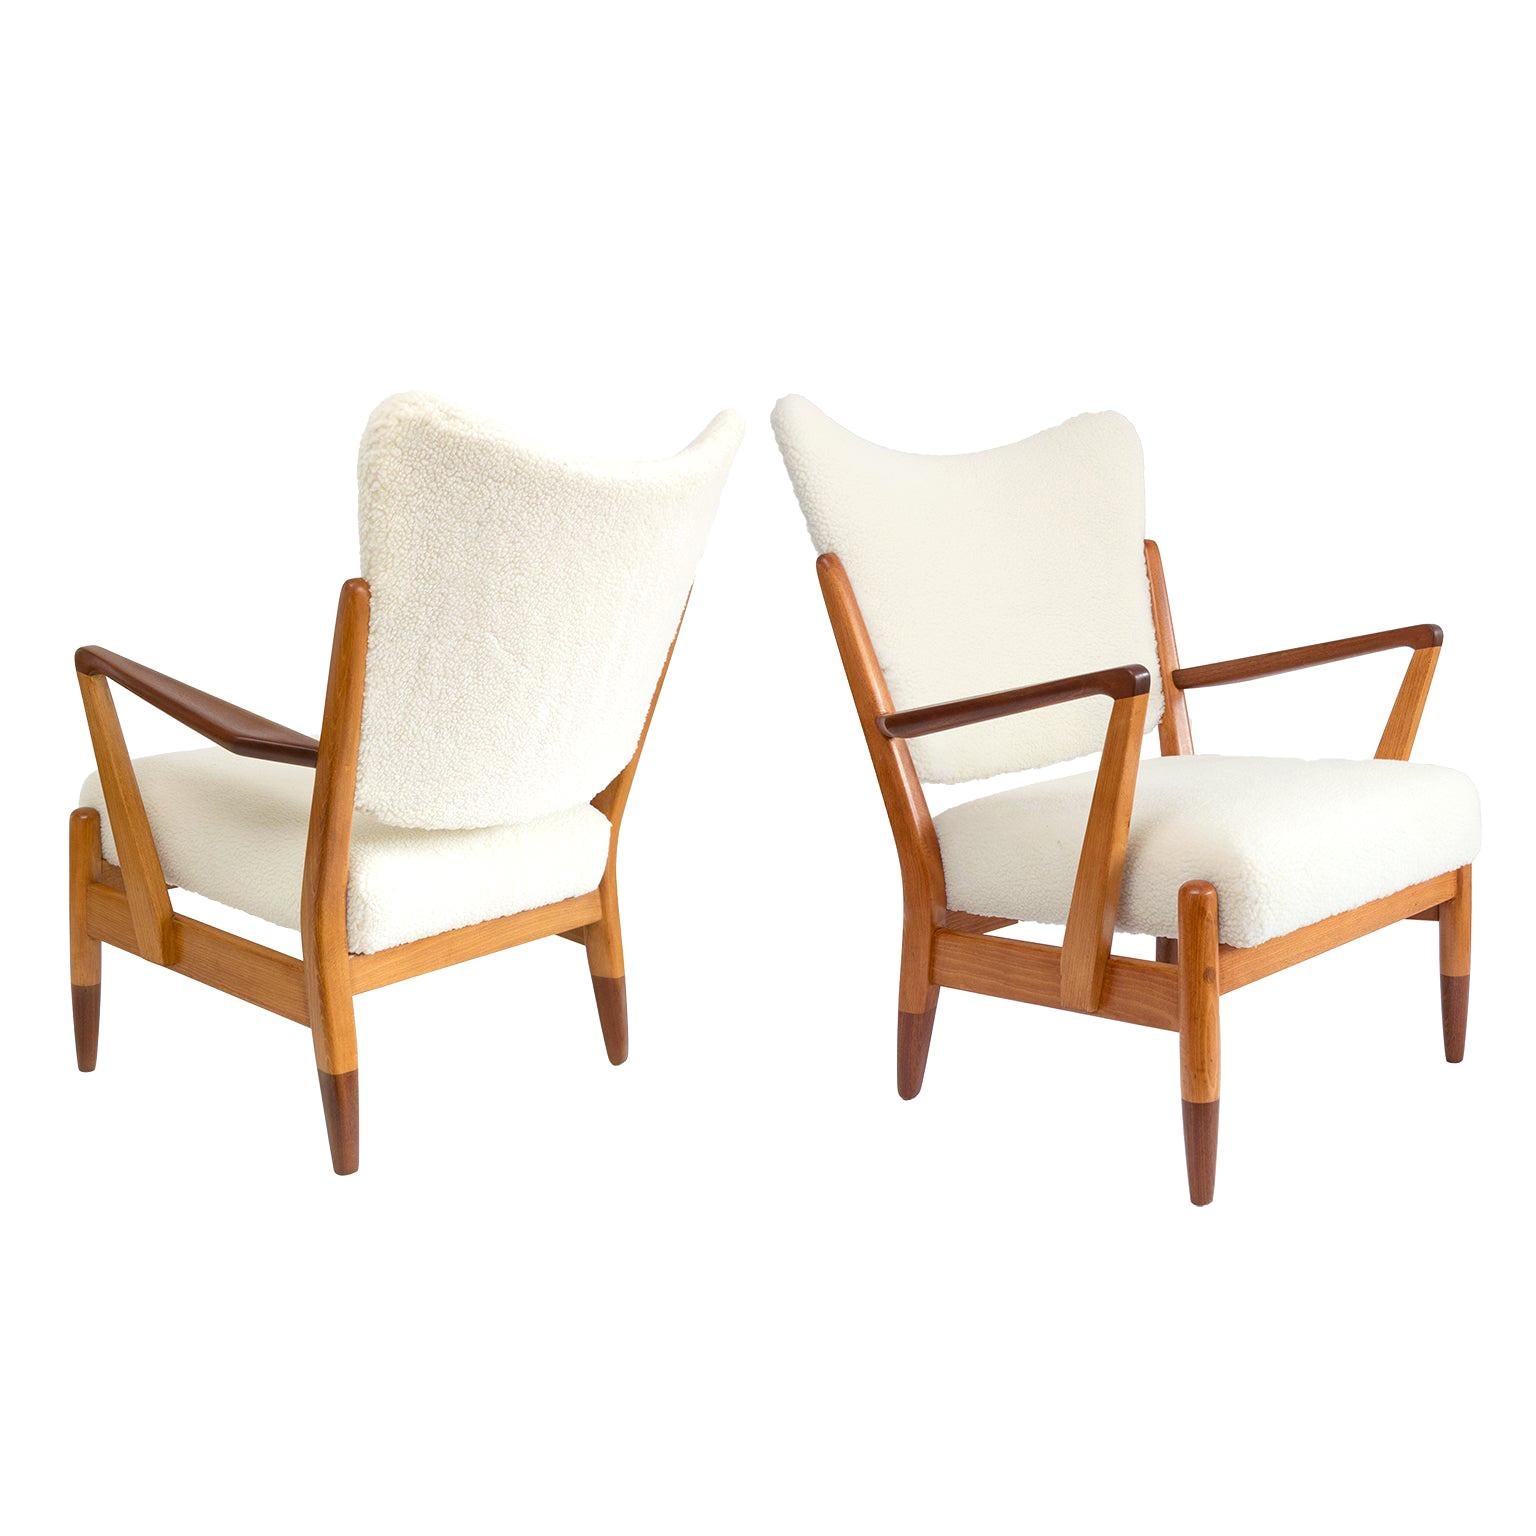 Pair of Scandinavian Modern Lounge Chairs with Faux Sheepskin, Teak Details